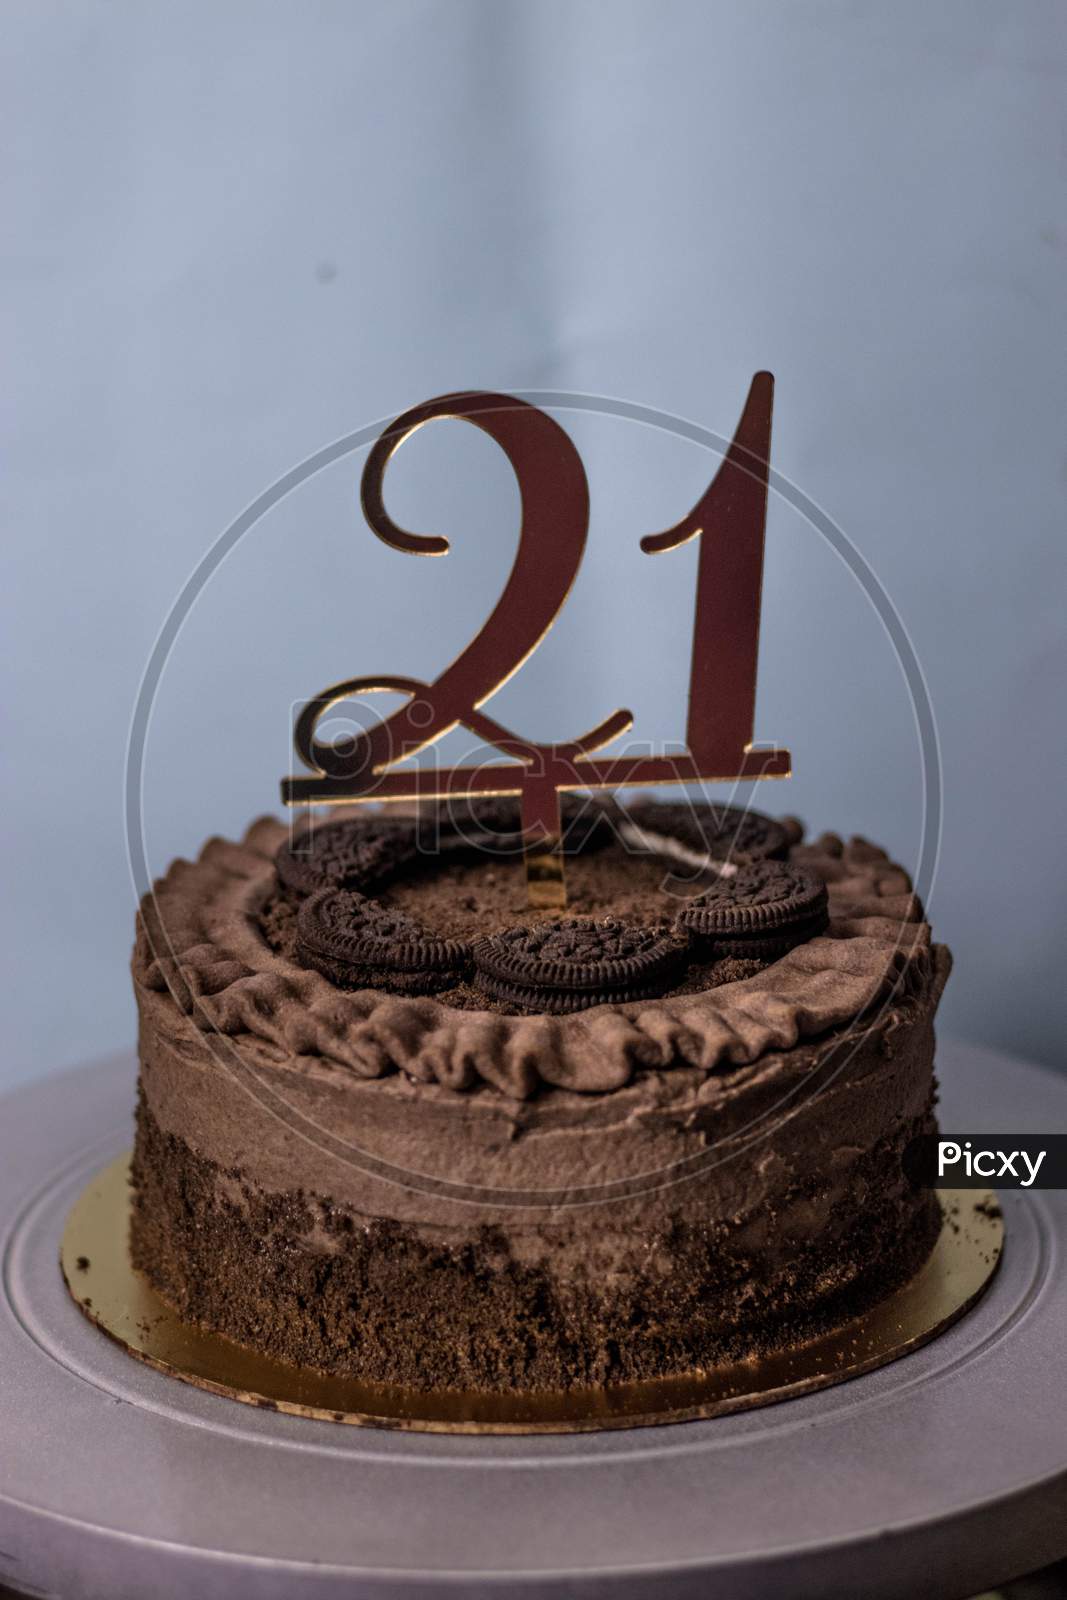 Oreo chocolate 21st birthday cake